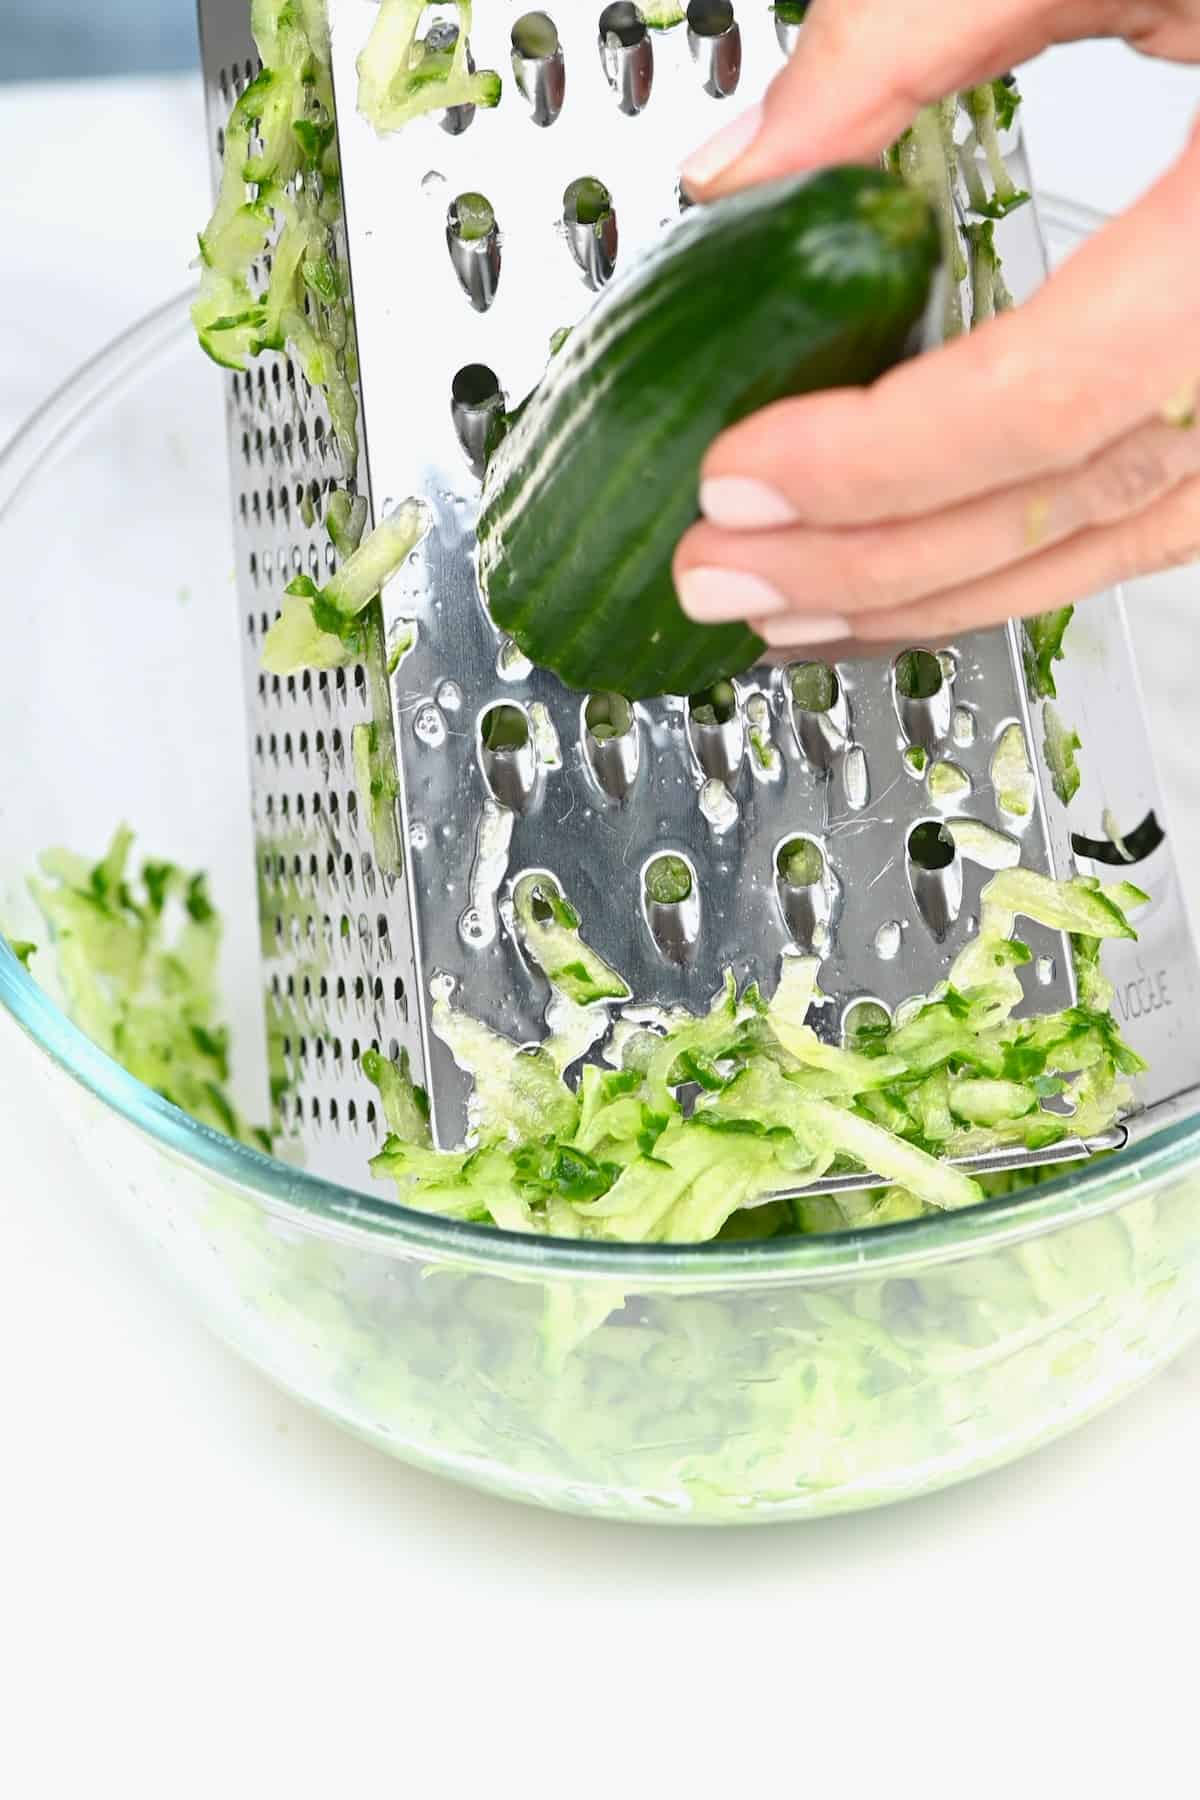 Grating a cucumber